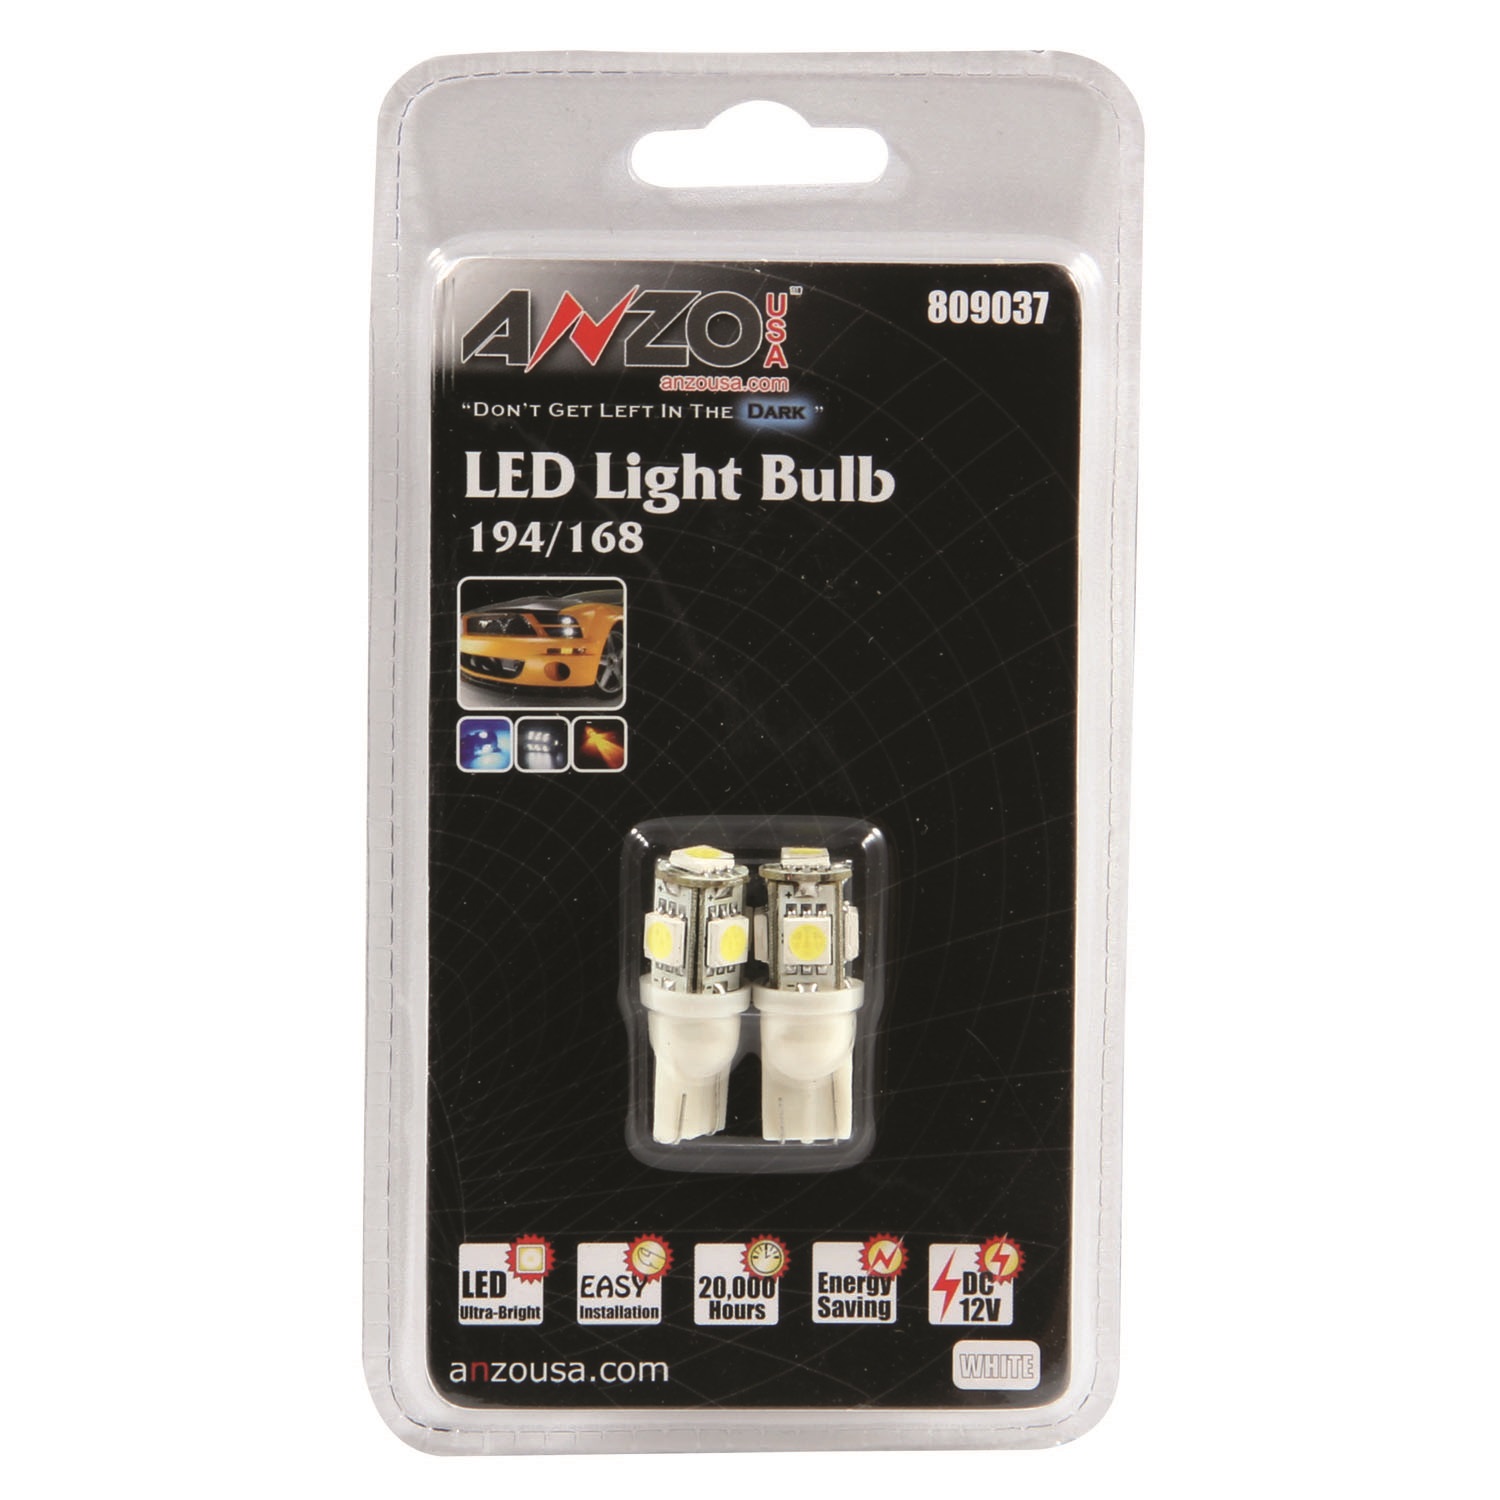 Anzo USA Anzo USA 809037 LED Replacement Bulb